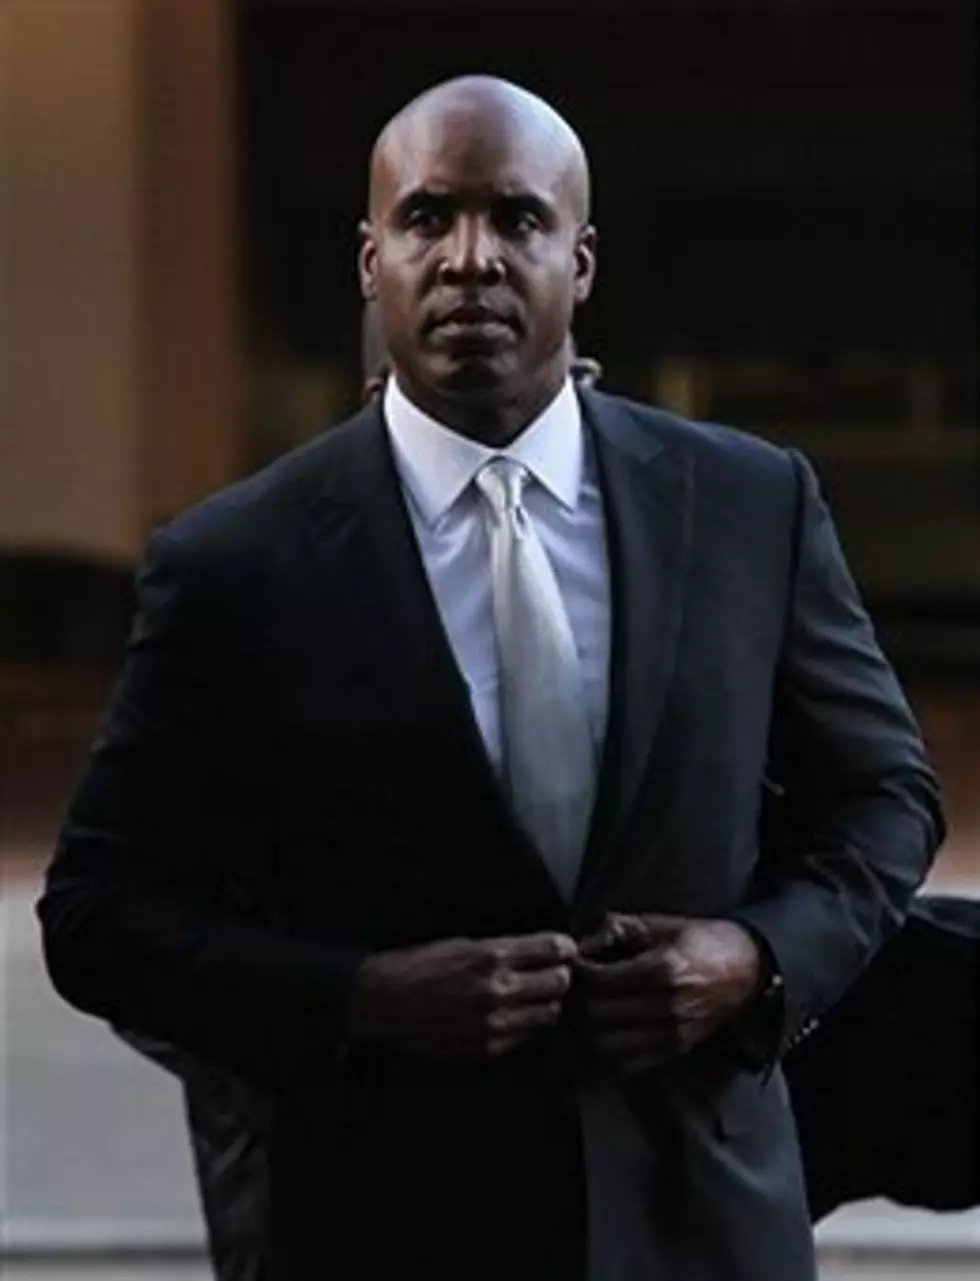 Barry Bonds’ perjury trial set to begin